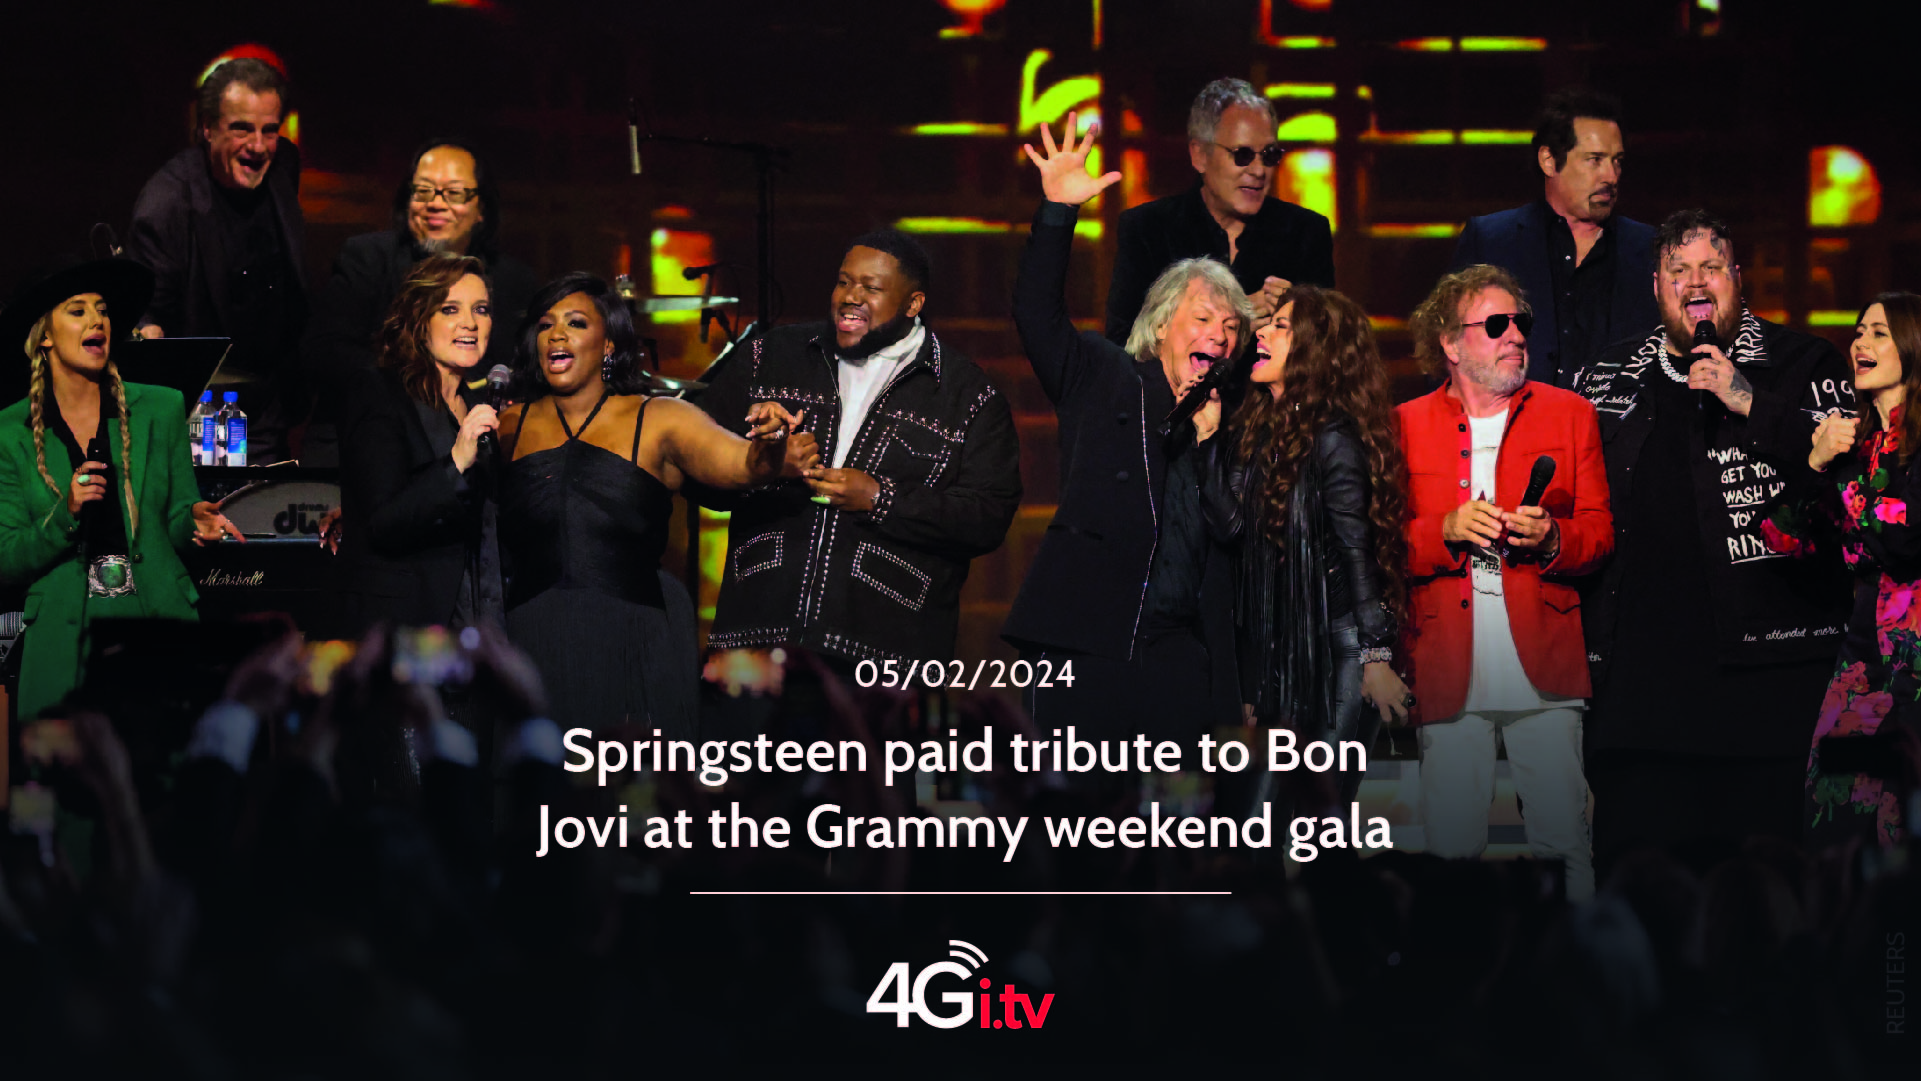 Подробнее о статье Springsteen paid tribute to Bon Jovi at the Grammy weekend gala